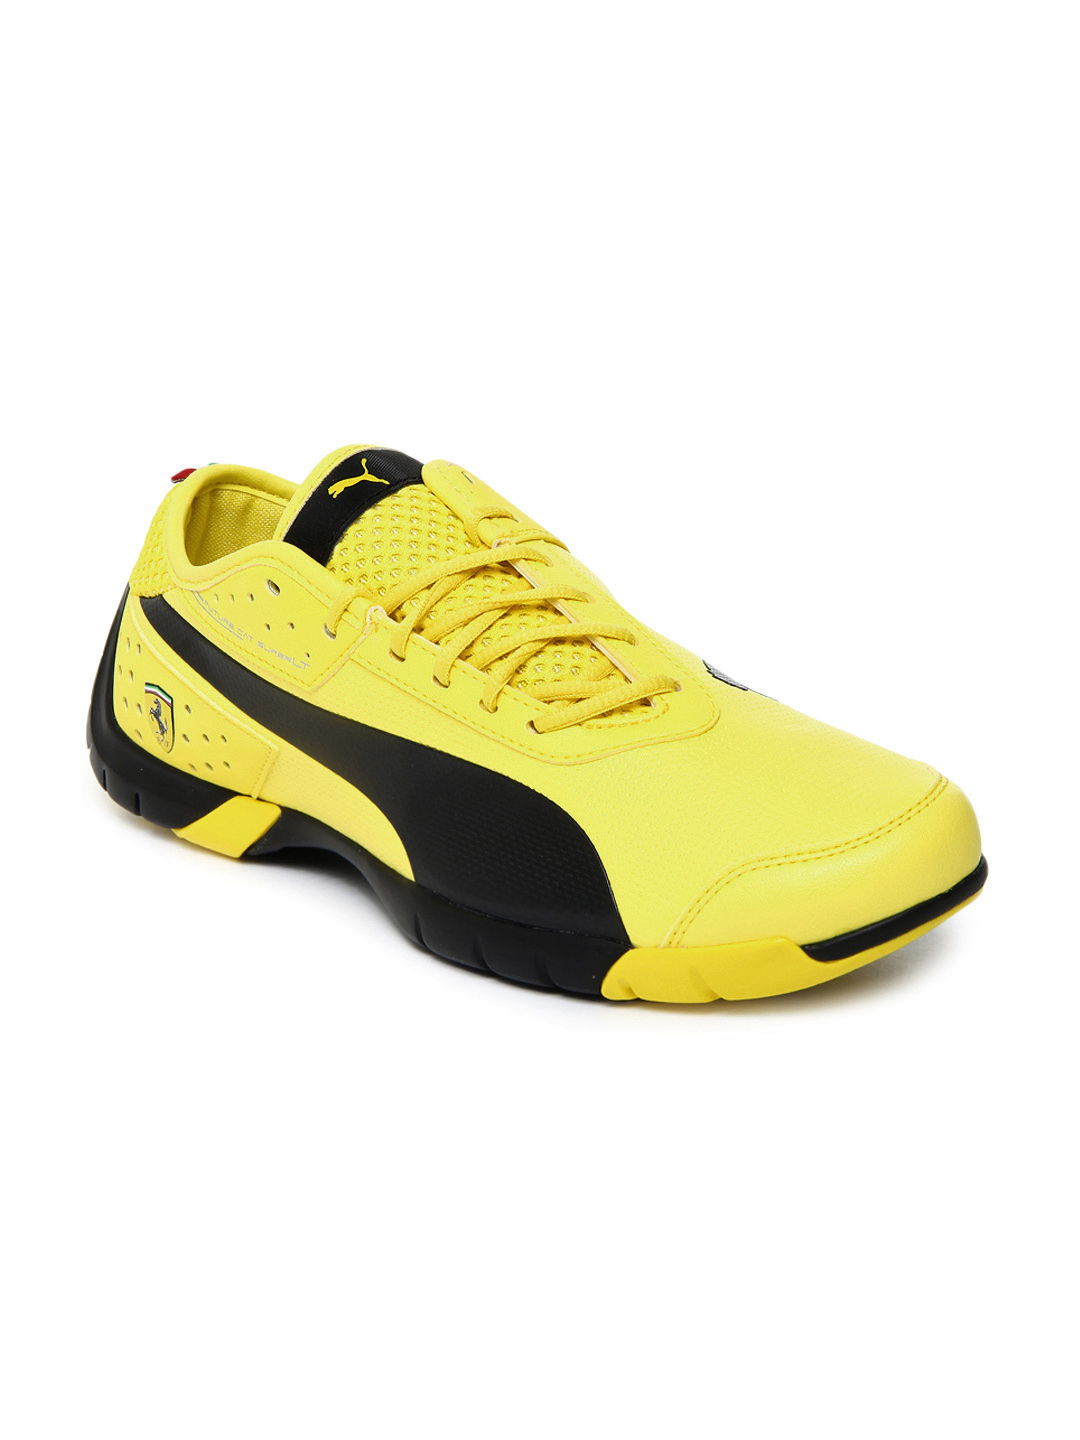 puma yellow ferrari shoes